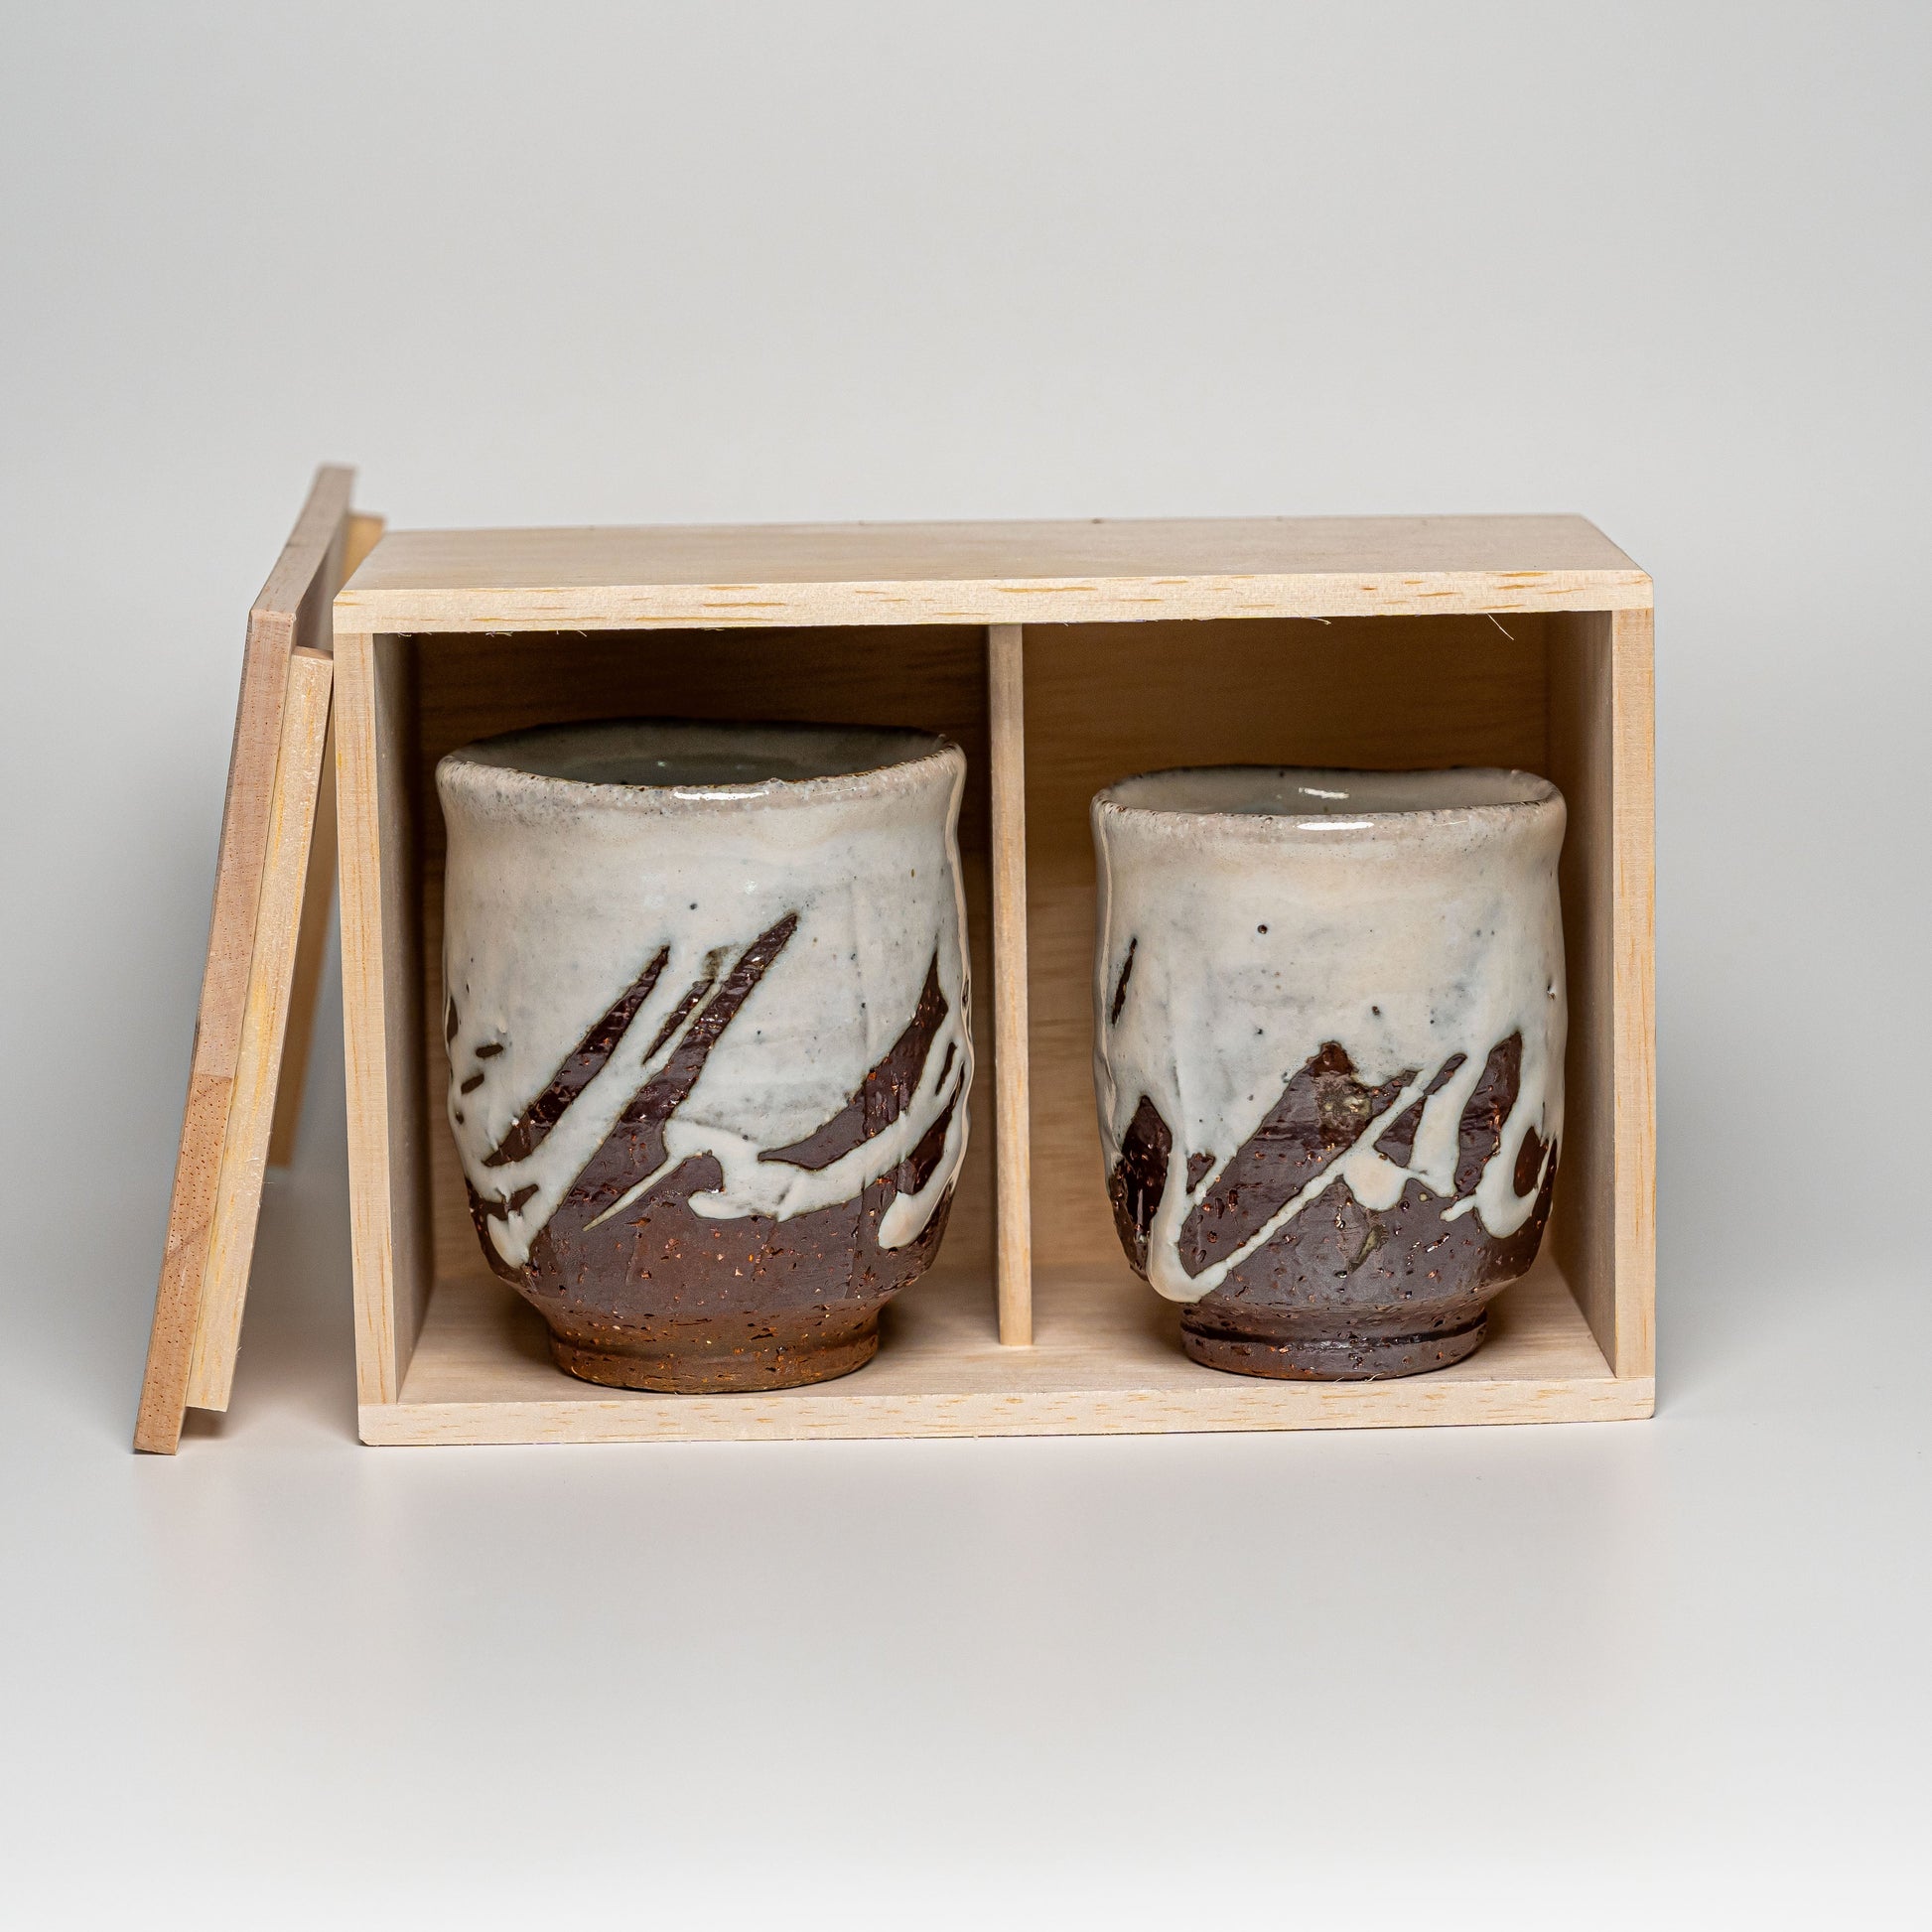 White Hagi yaki teacups in their wooden box on a white background